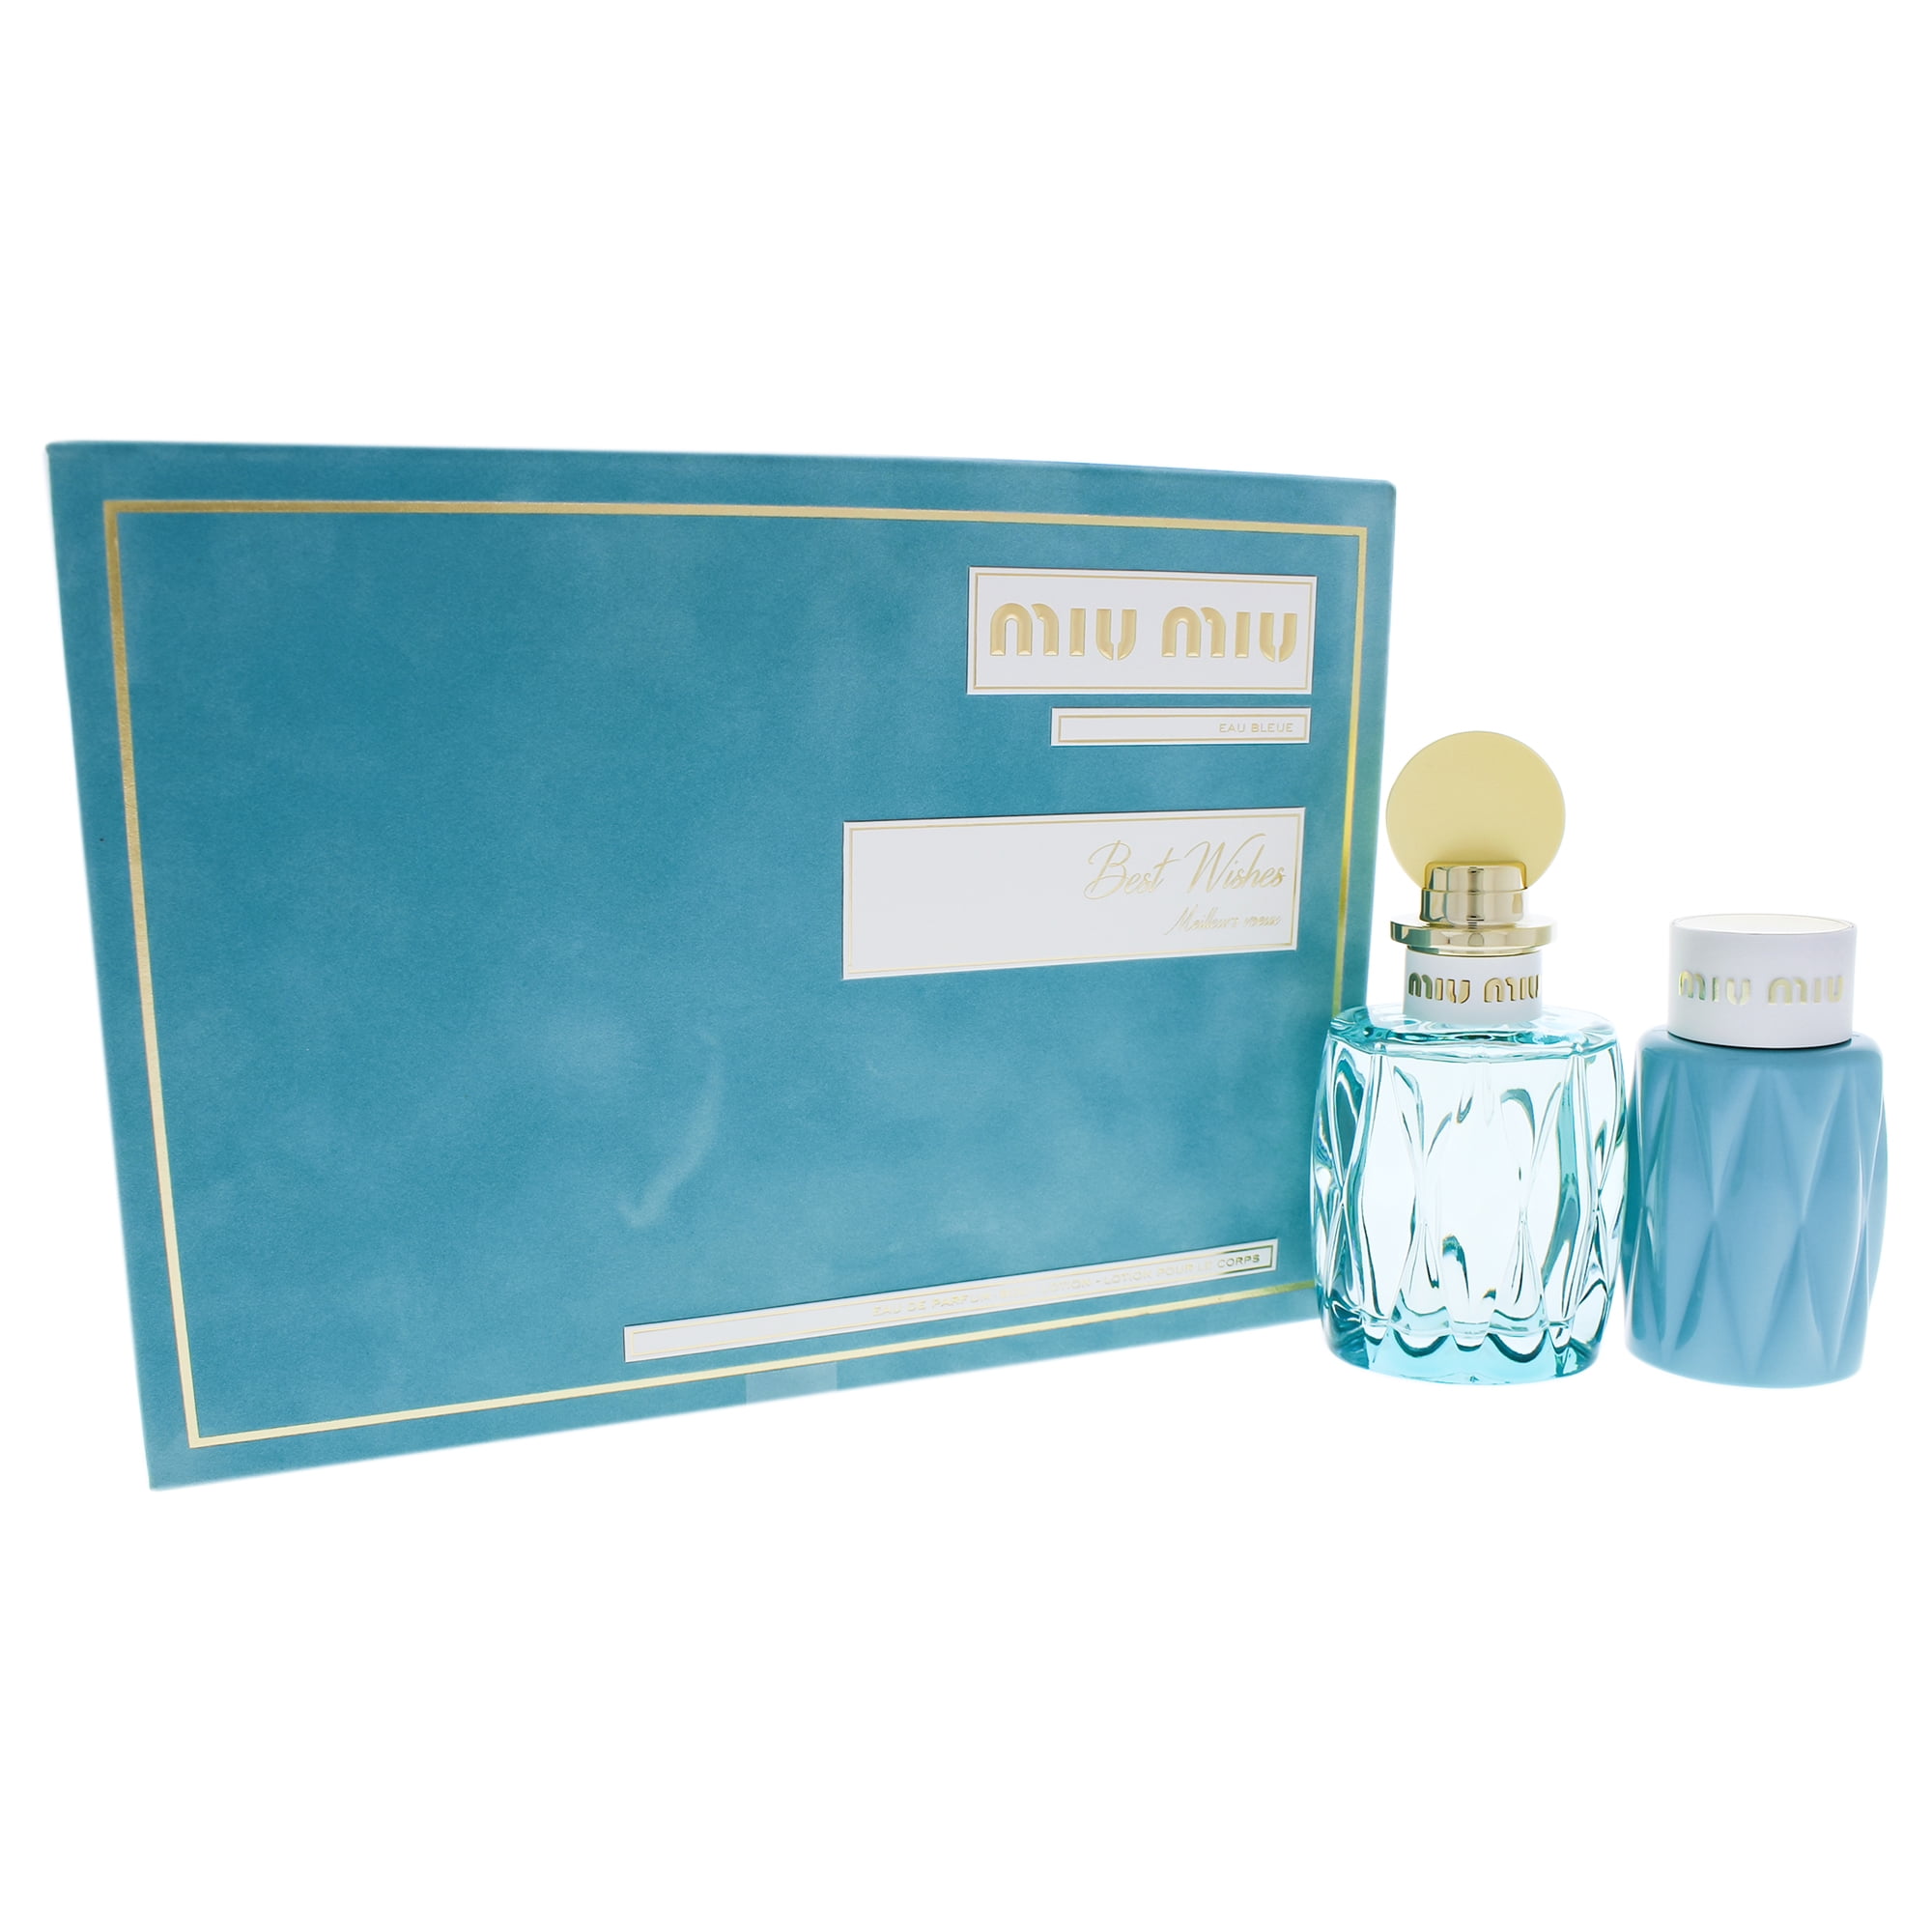 Miu Miu Leau Bleue Perfume Gift Set for Women, 2 Pieces